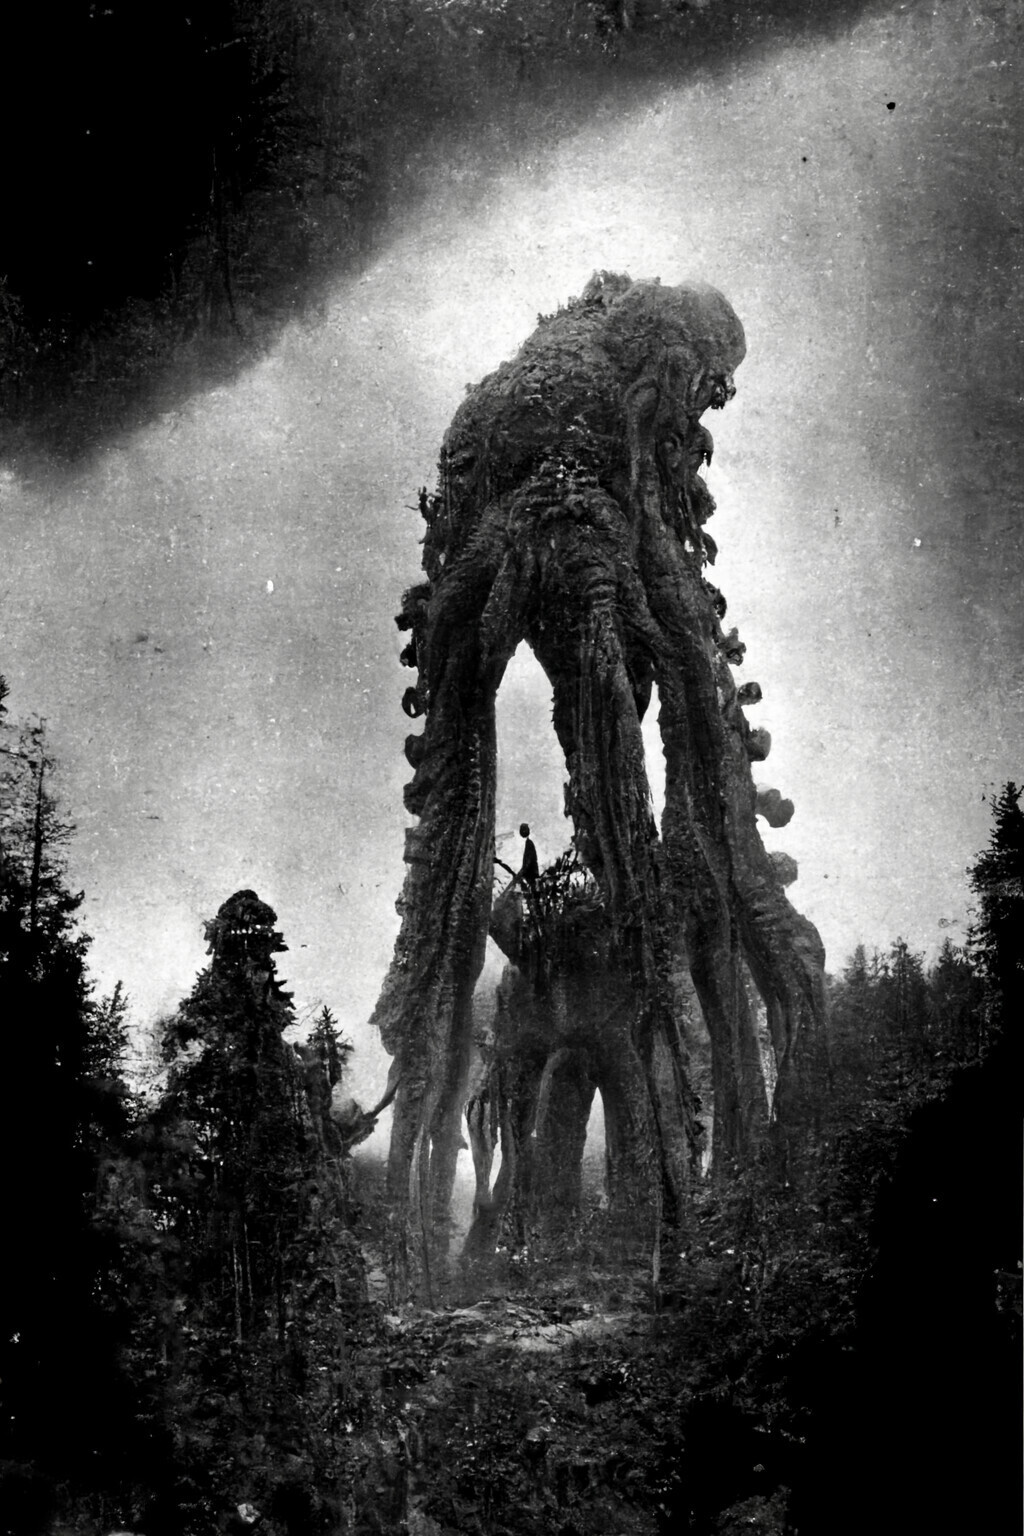 Abominations
c. 1881
Photograph
'God has abandoned us.'